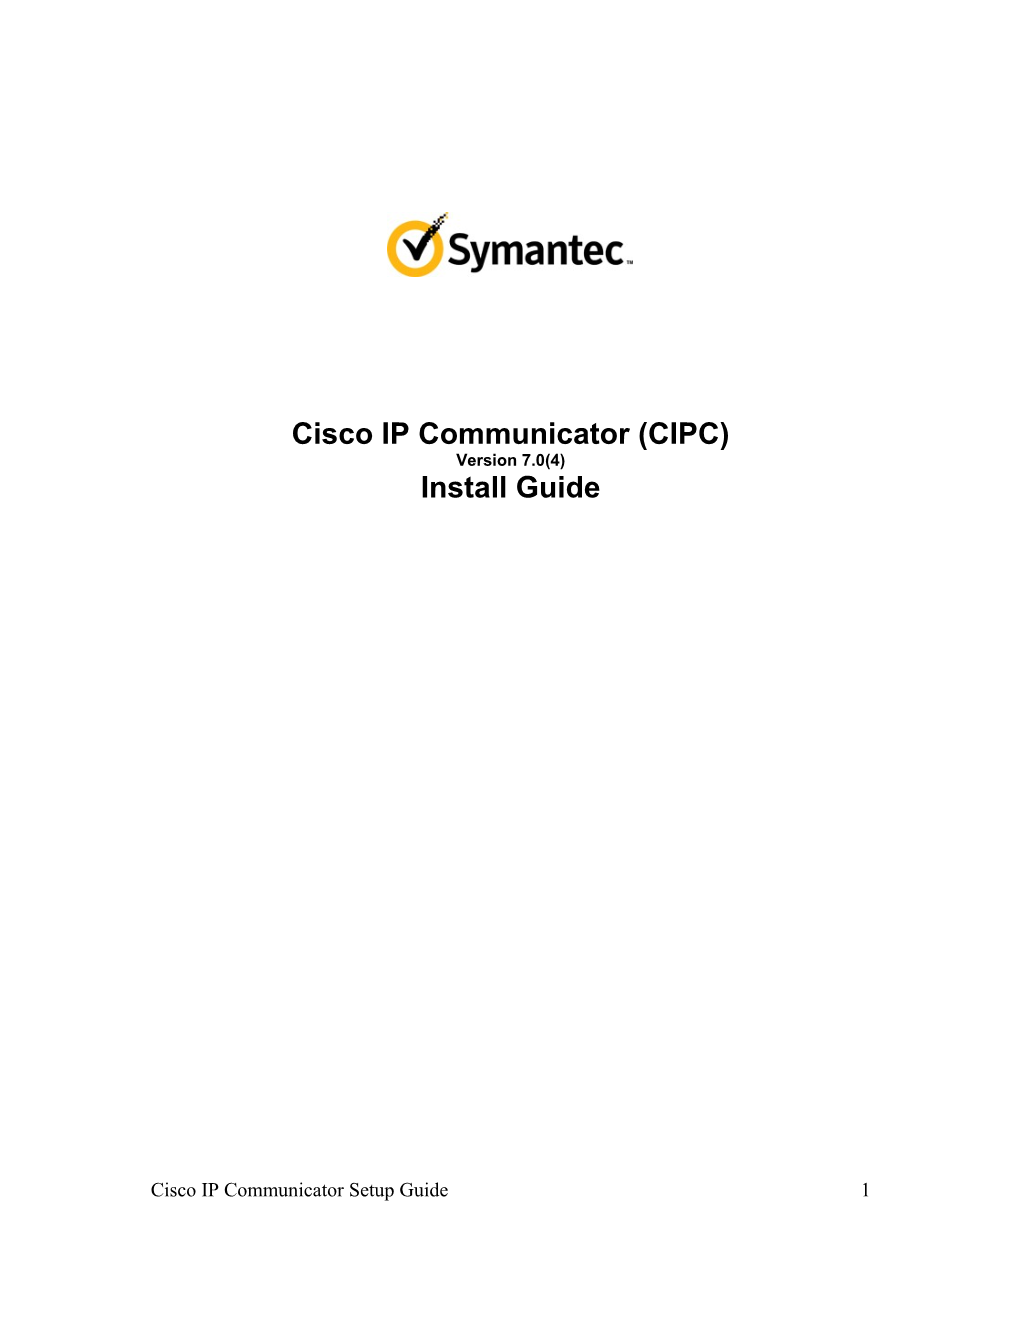 Cisco IP Communicator (CIPC) Install Guide